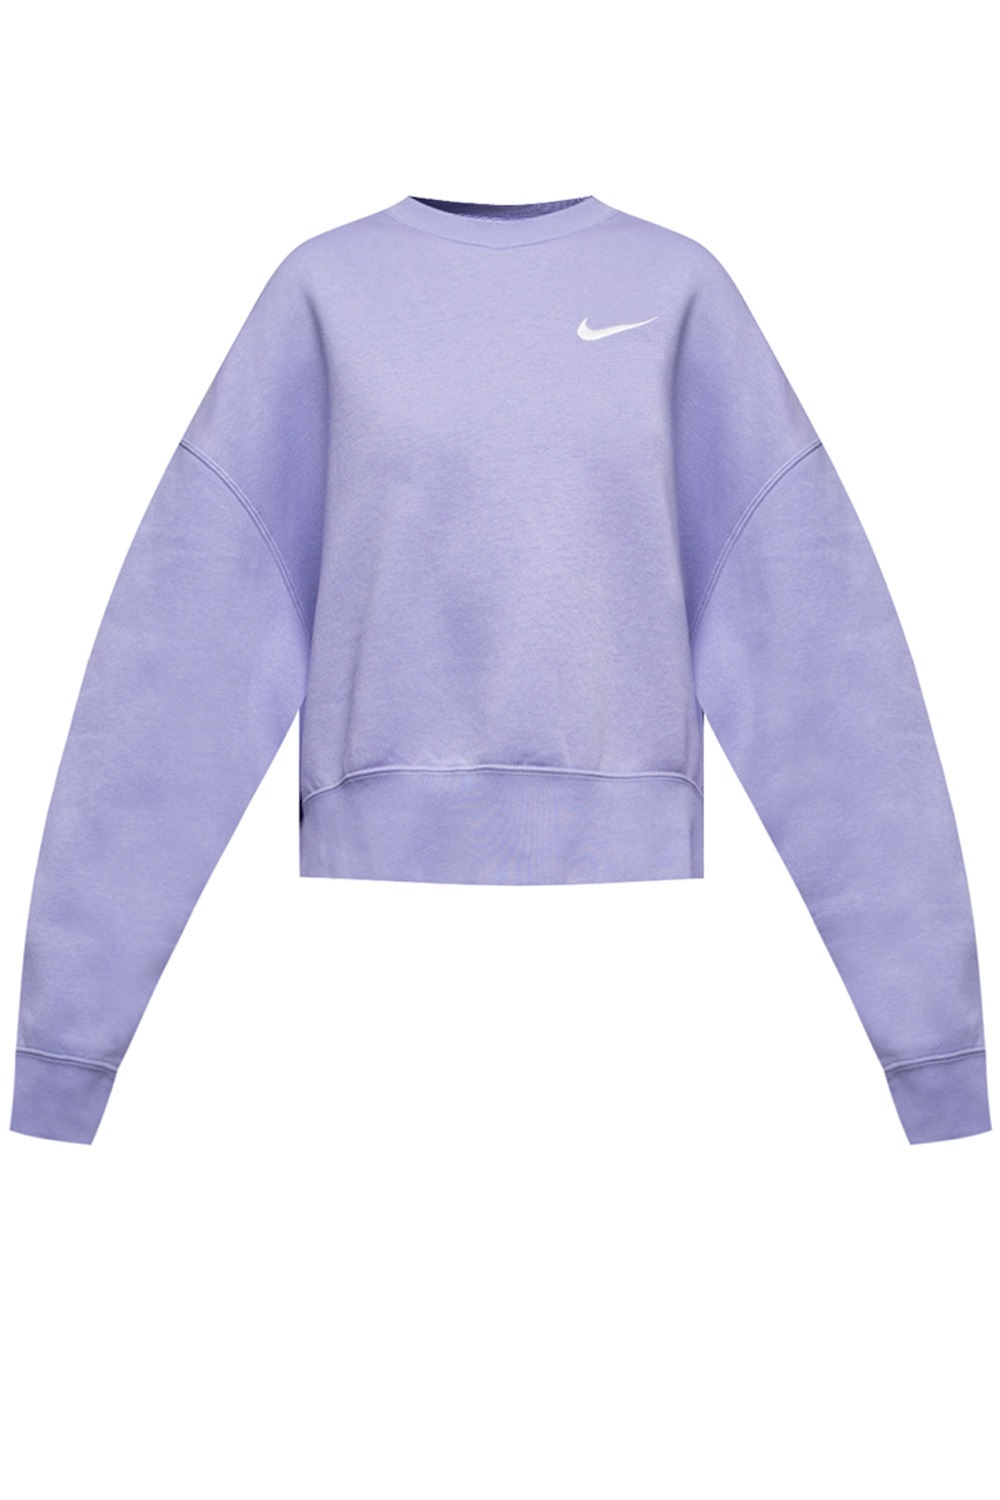 light purple sweatshirt nike